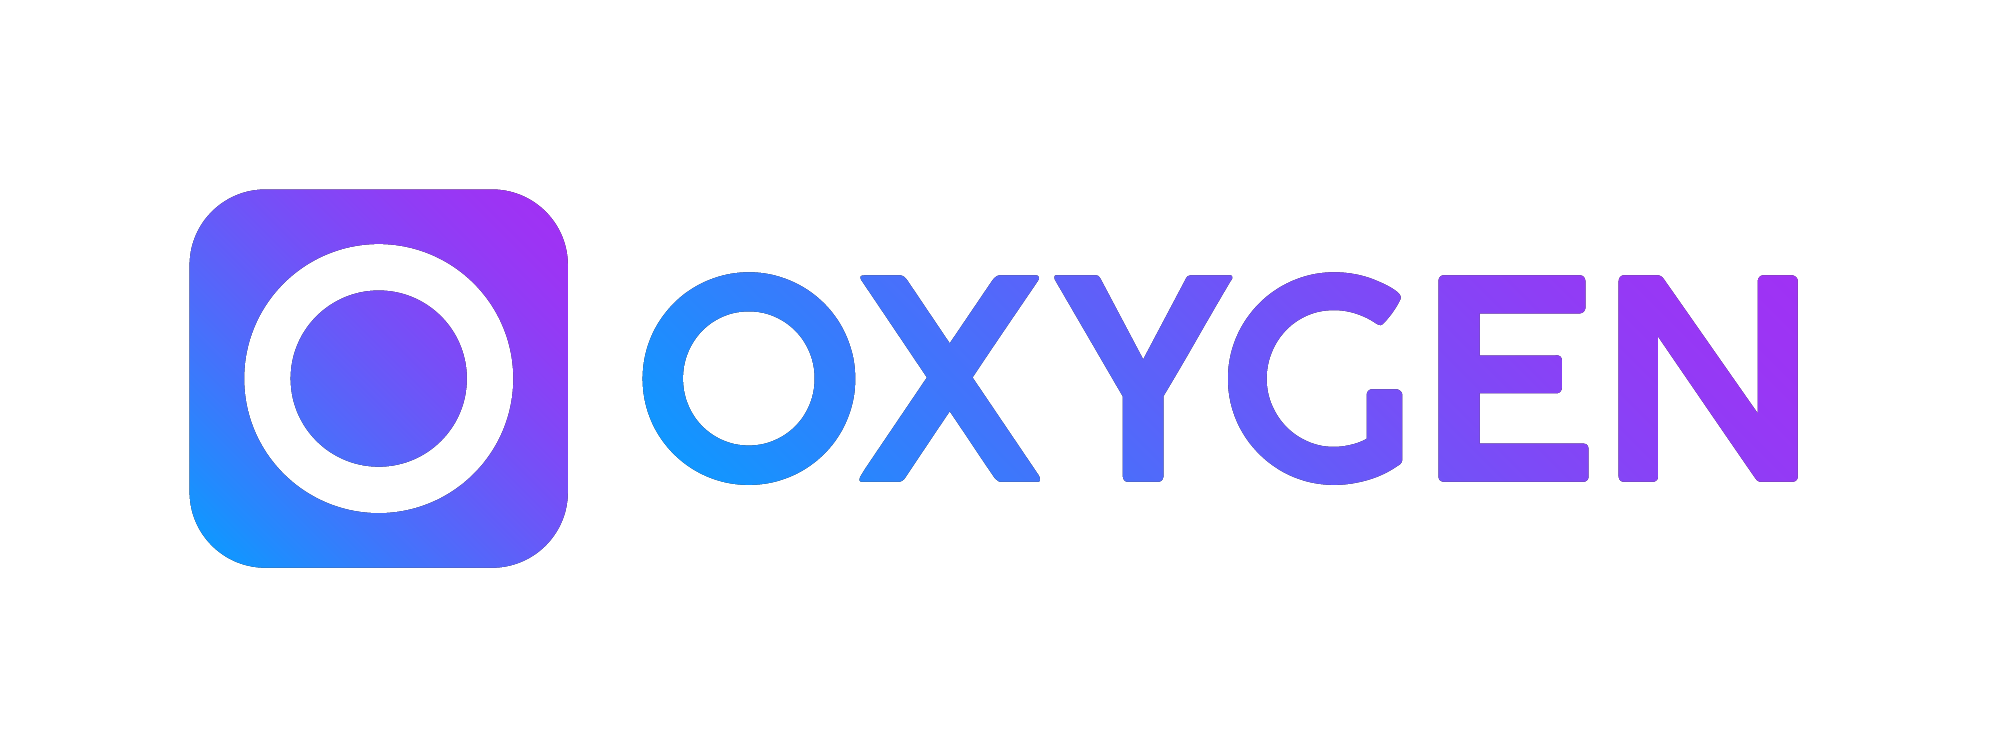 Oxygen Pelatologio